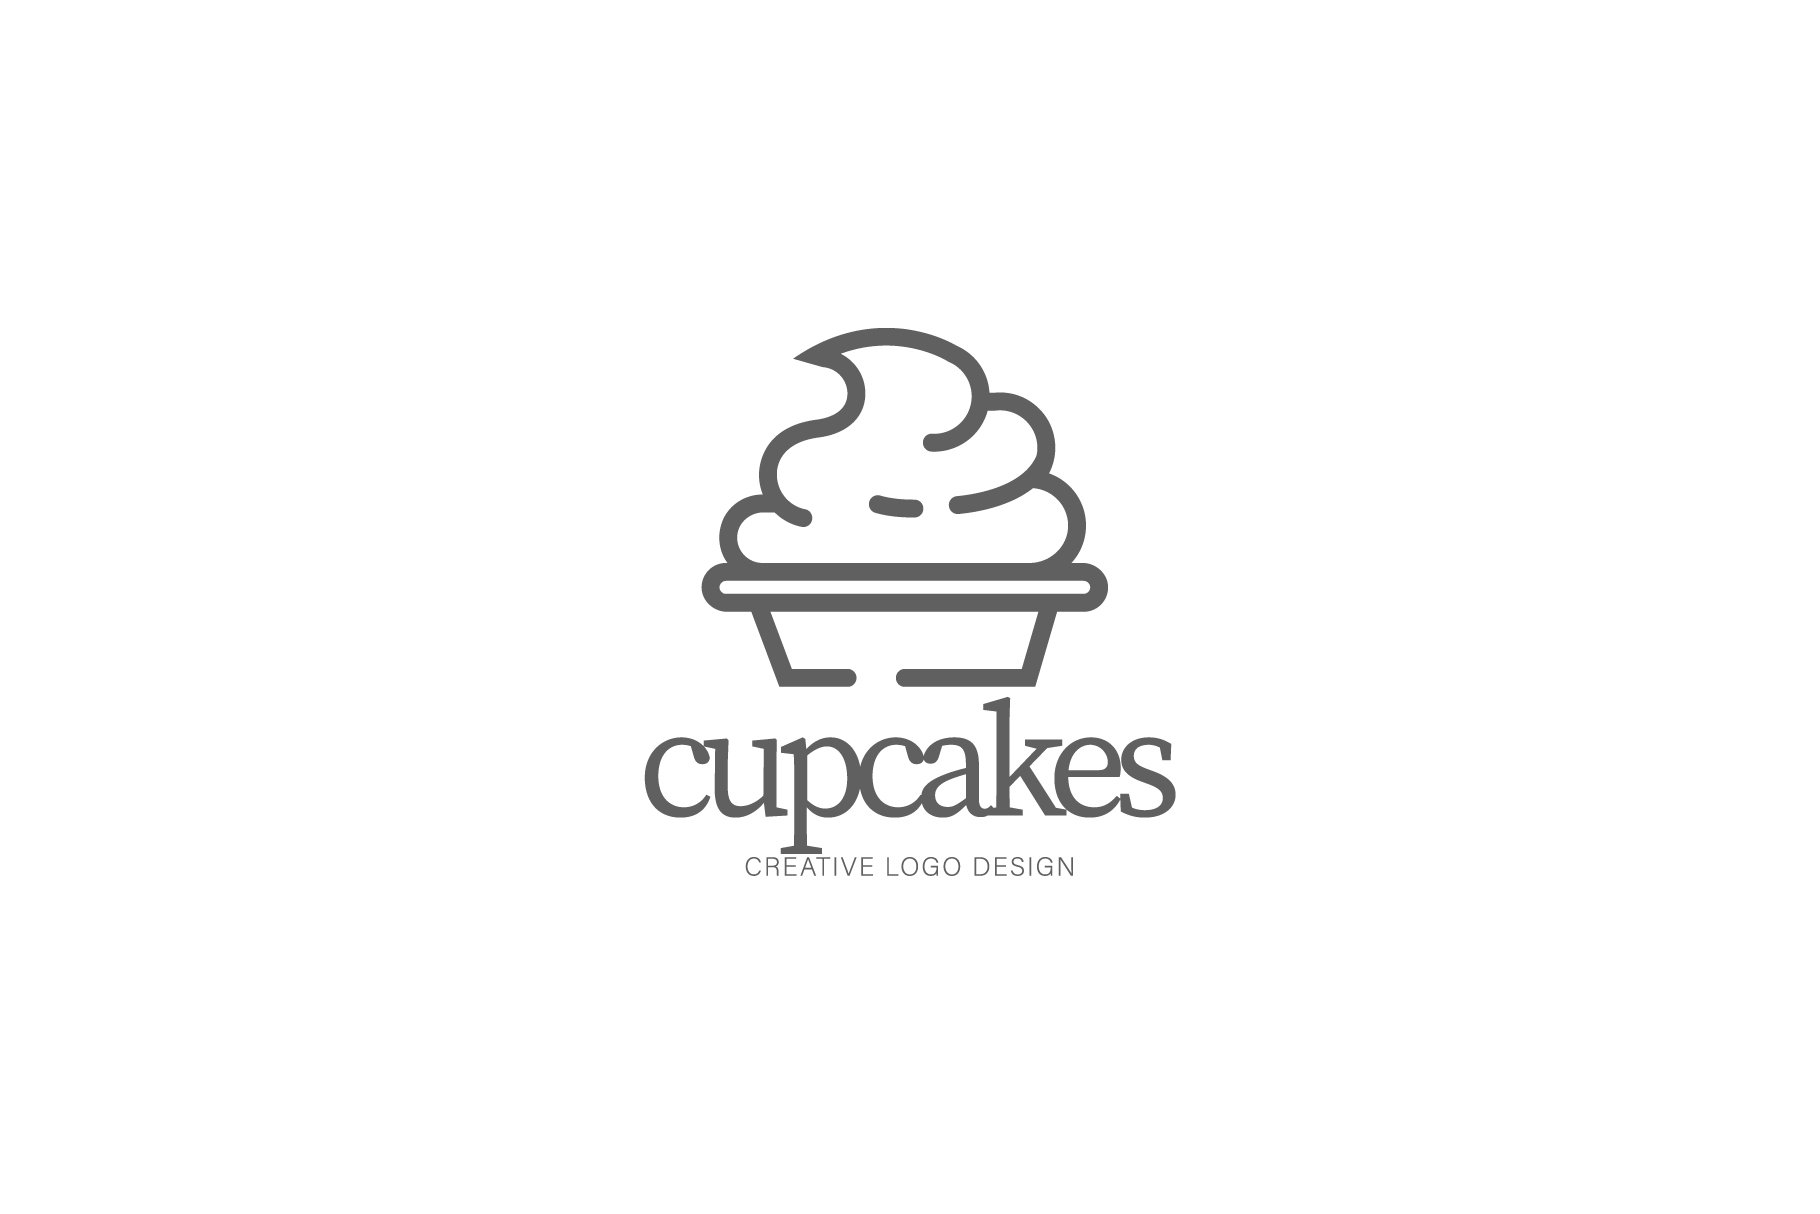 cupcakes logo preview image.